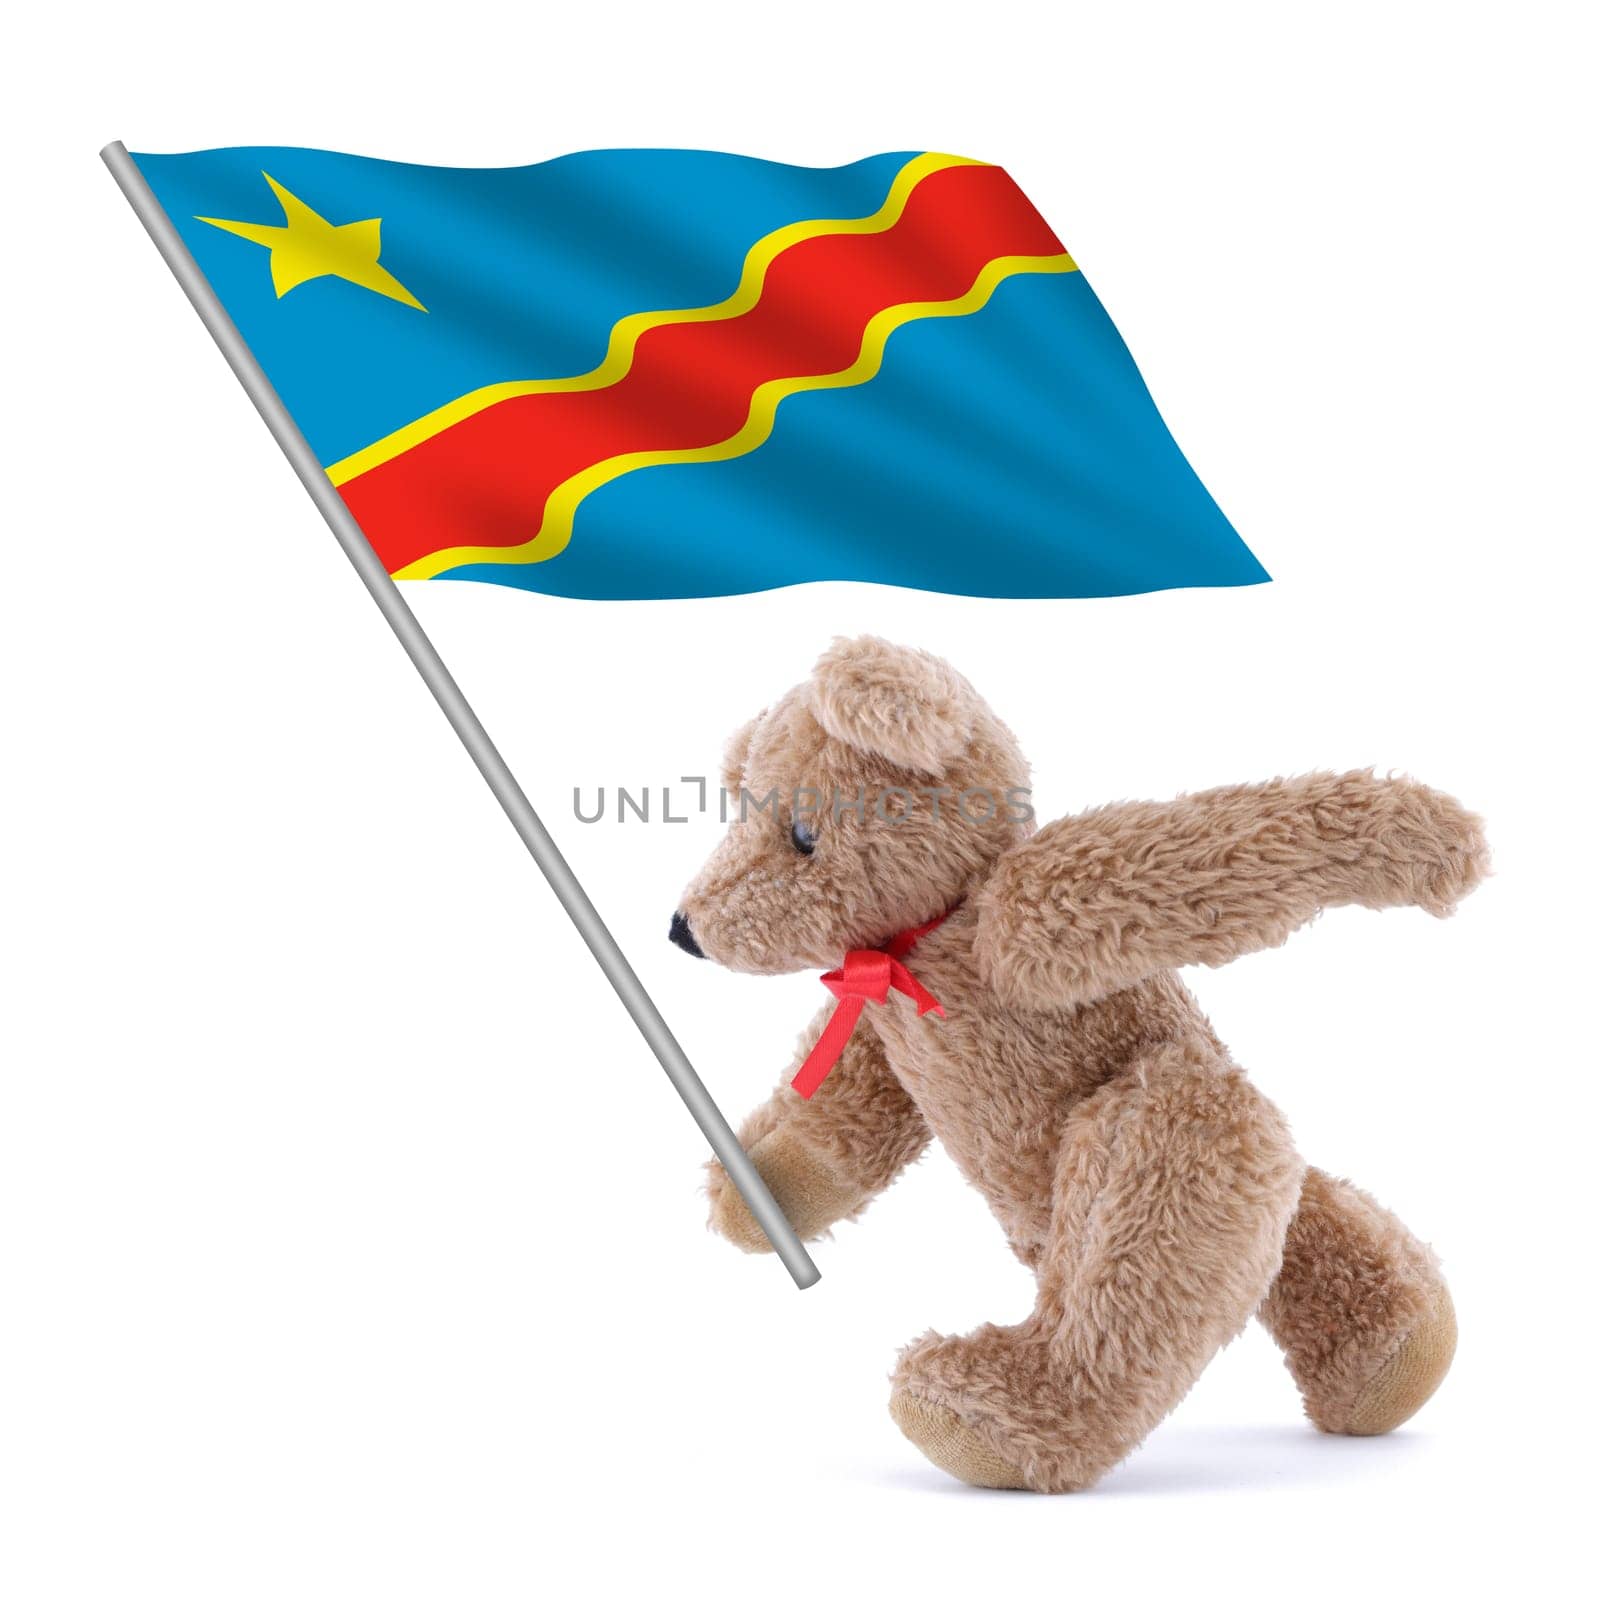 A Democratic Republic of Congo flag being carried by a cute teddy bear